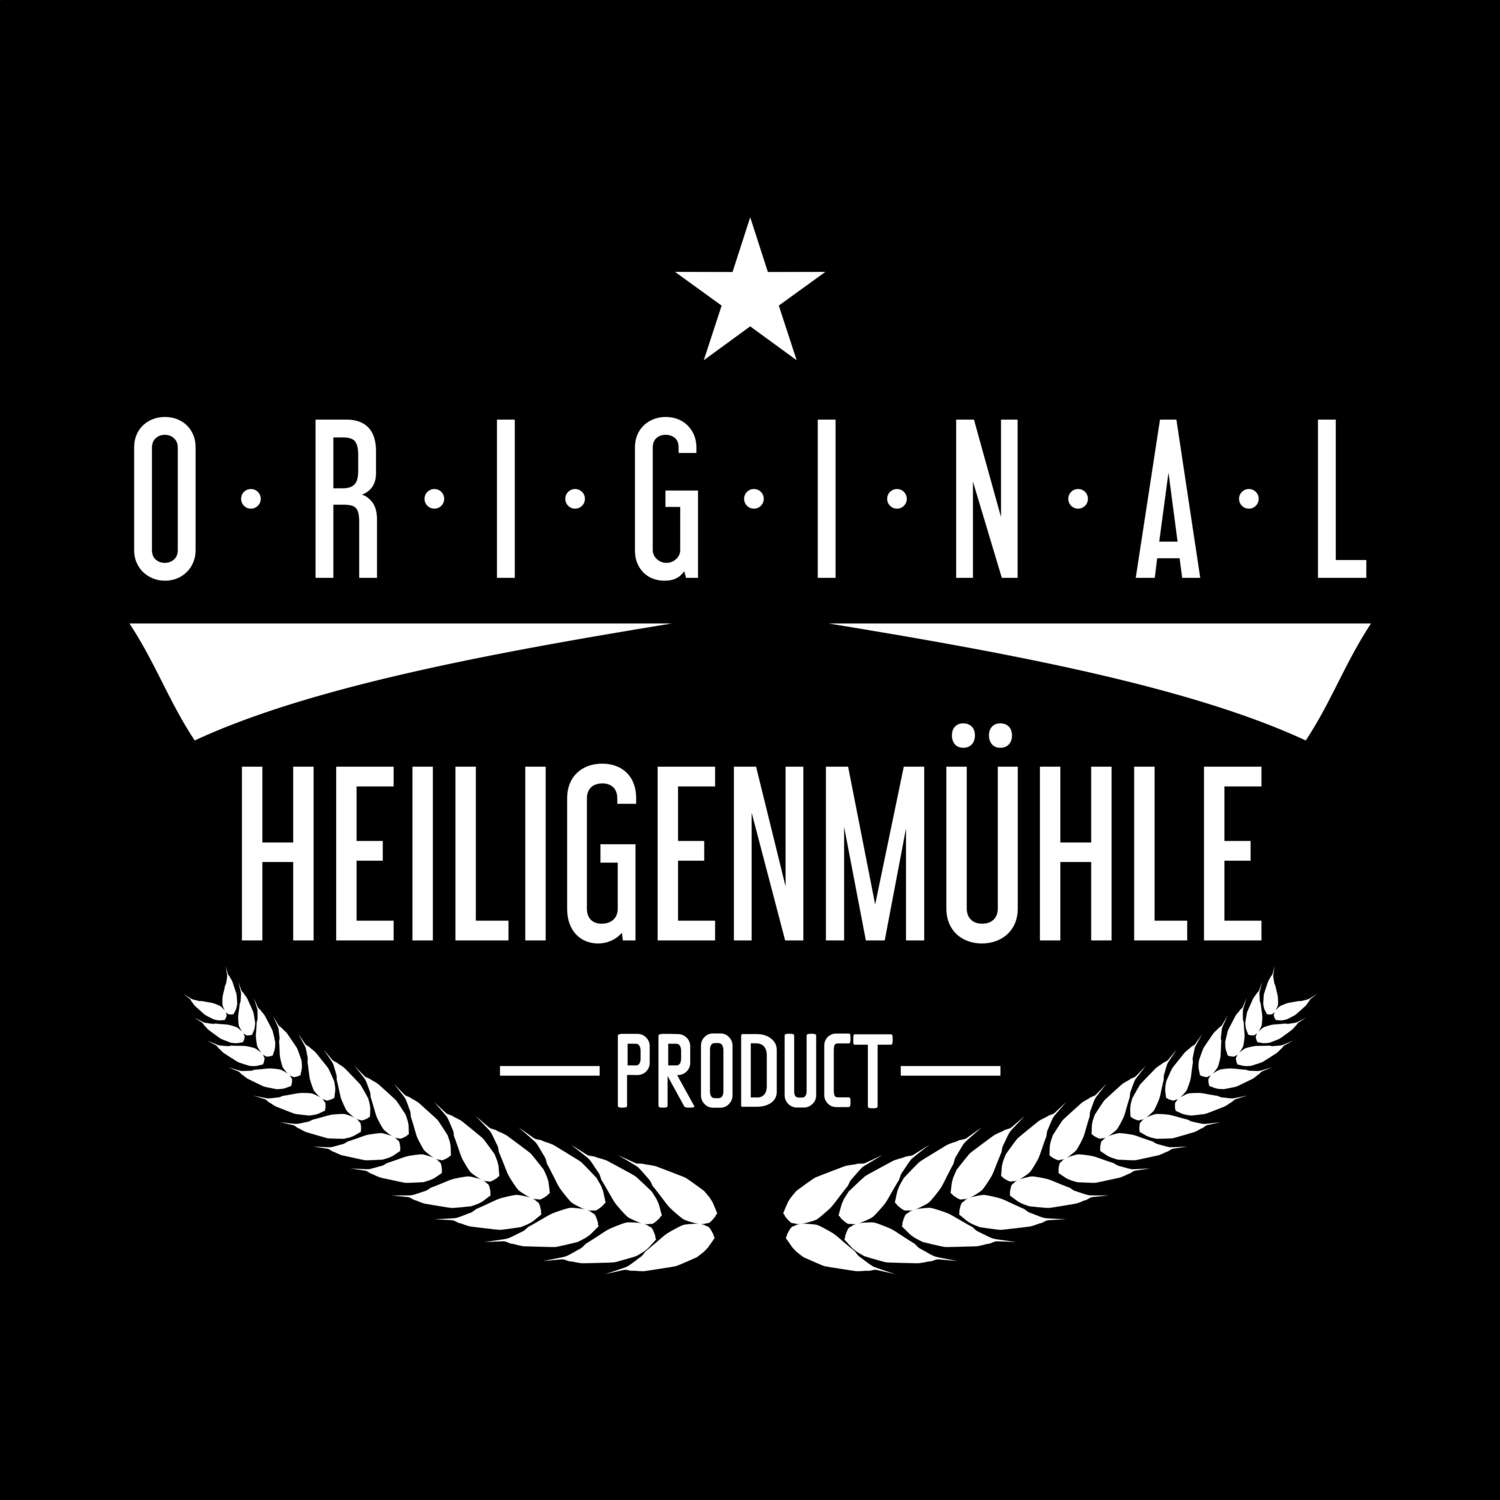 Heiligenmühle T-Shirt »Original Product«